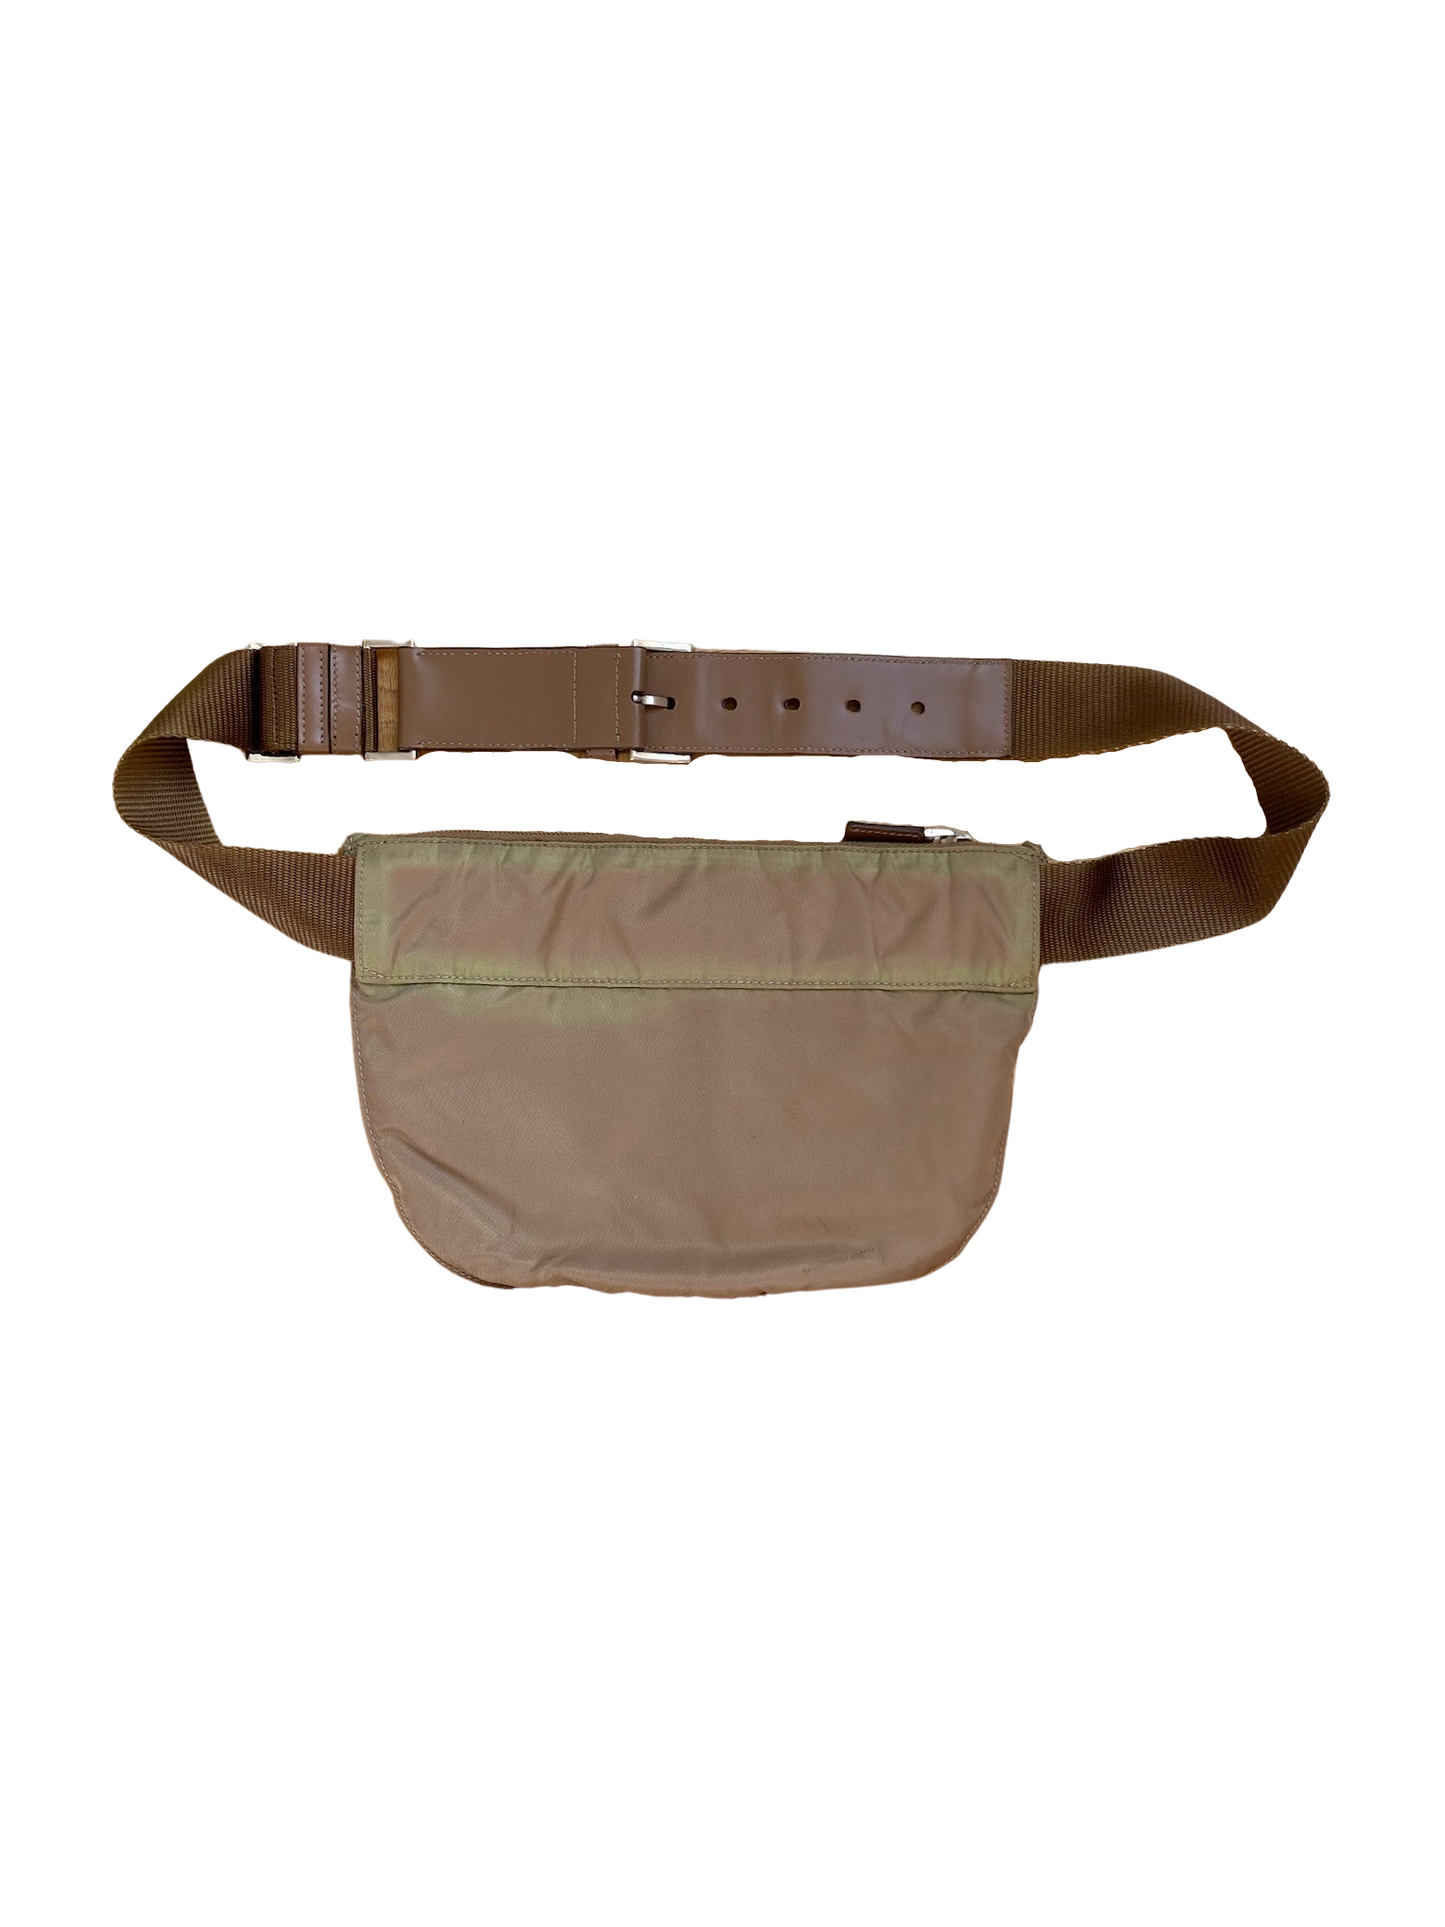 Prada Beige Nylon & Leather Bum Bag